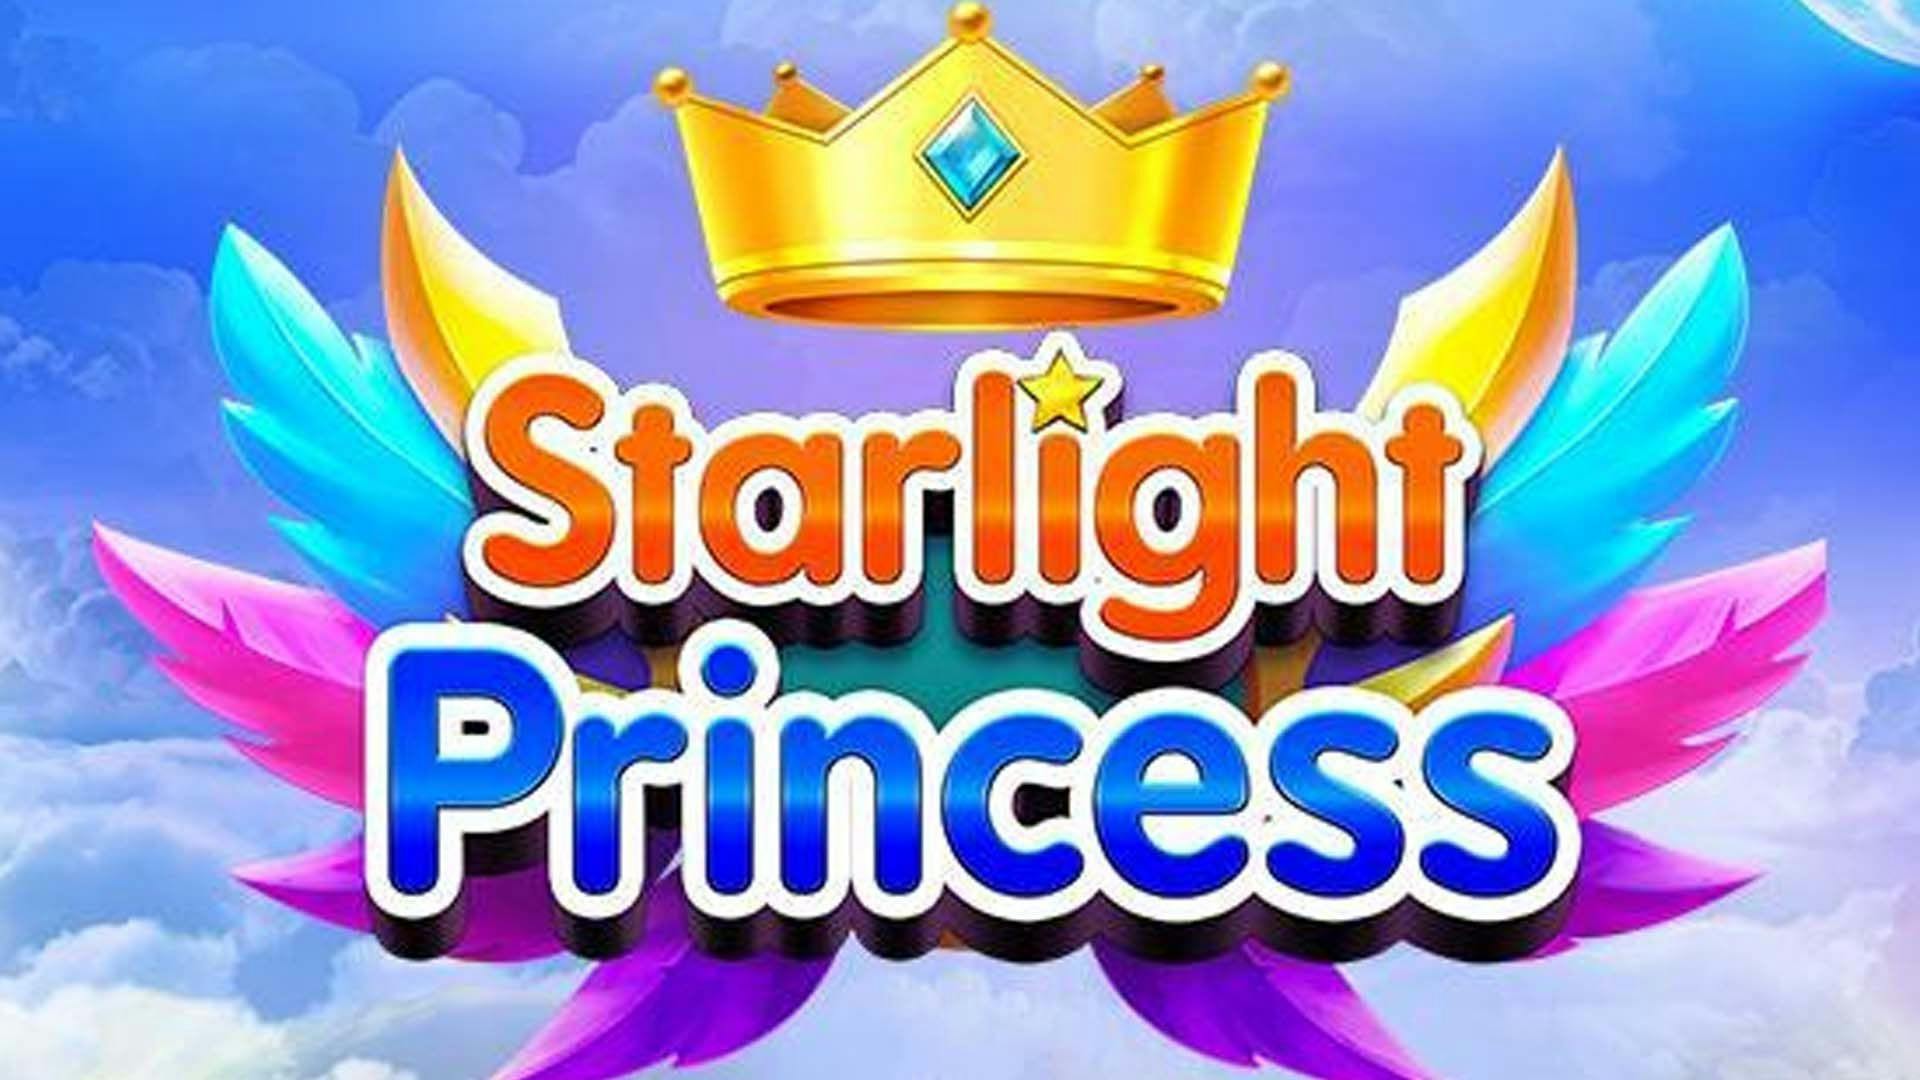 Starlight Princess Slot Machine Online Free Play